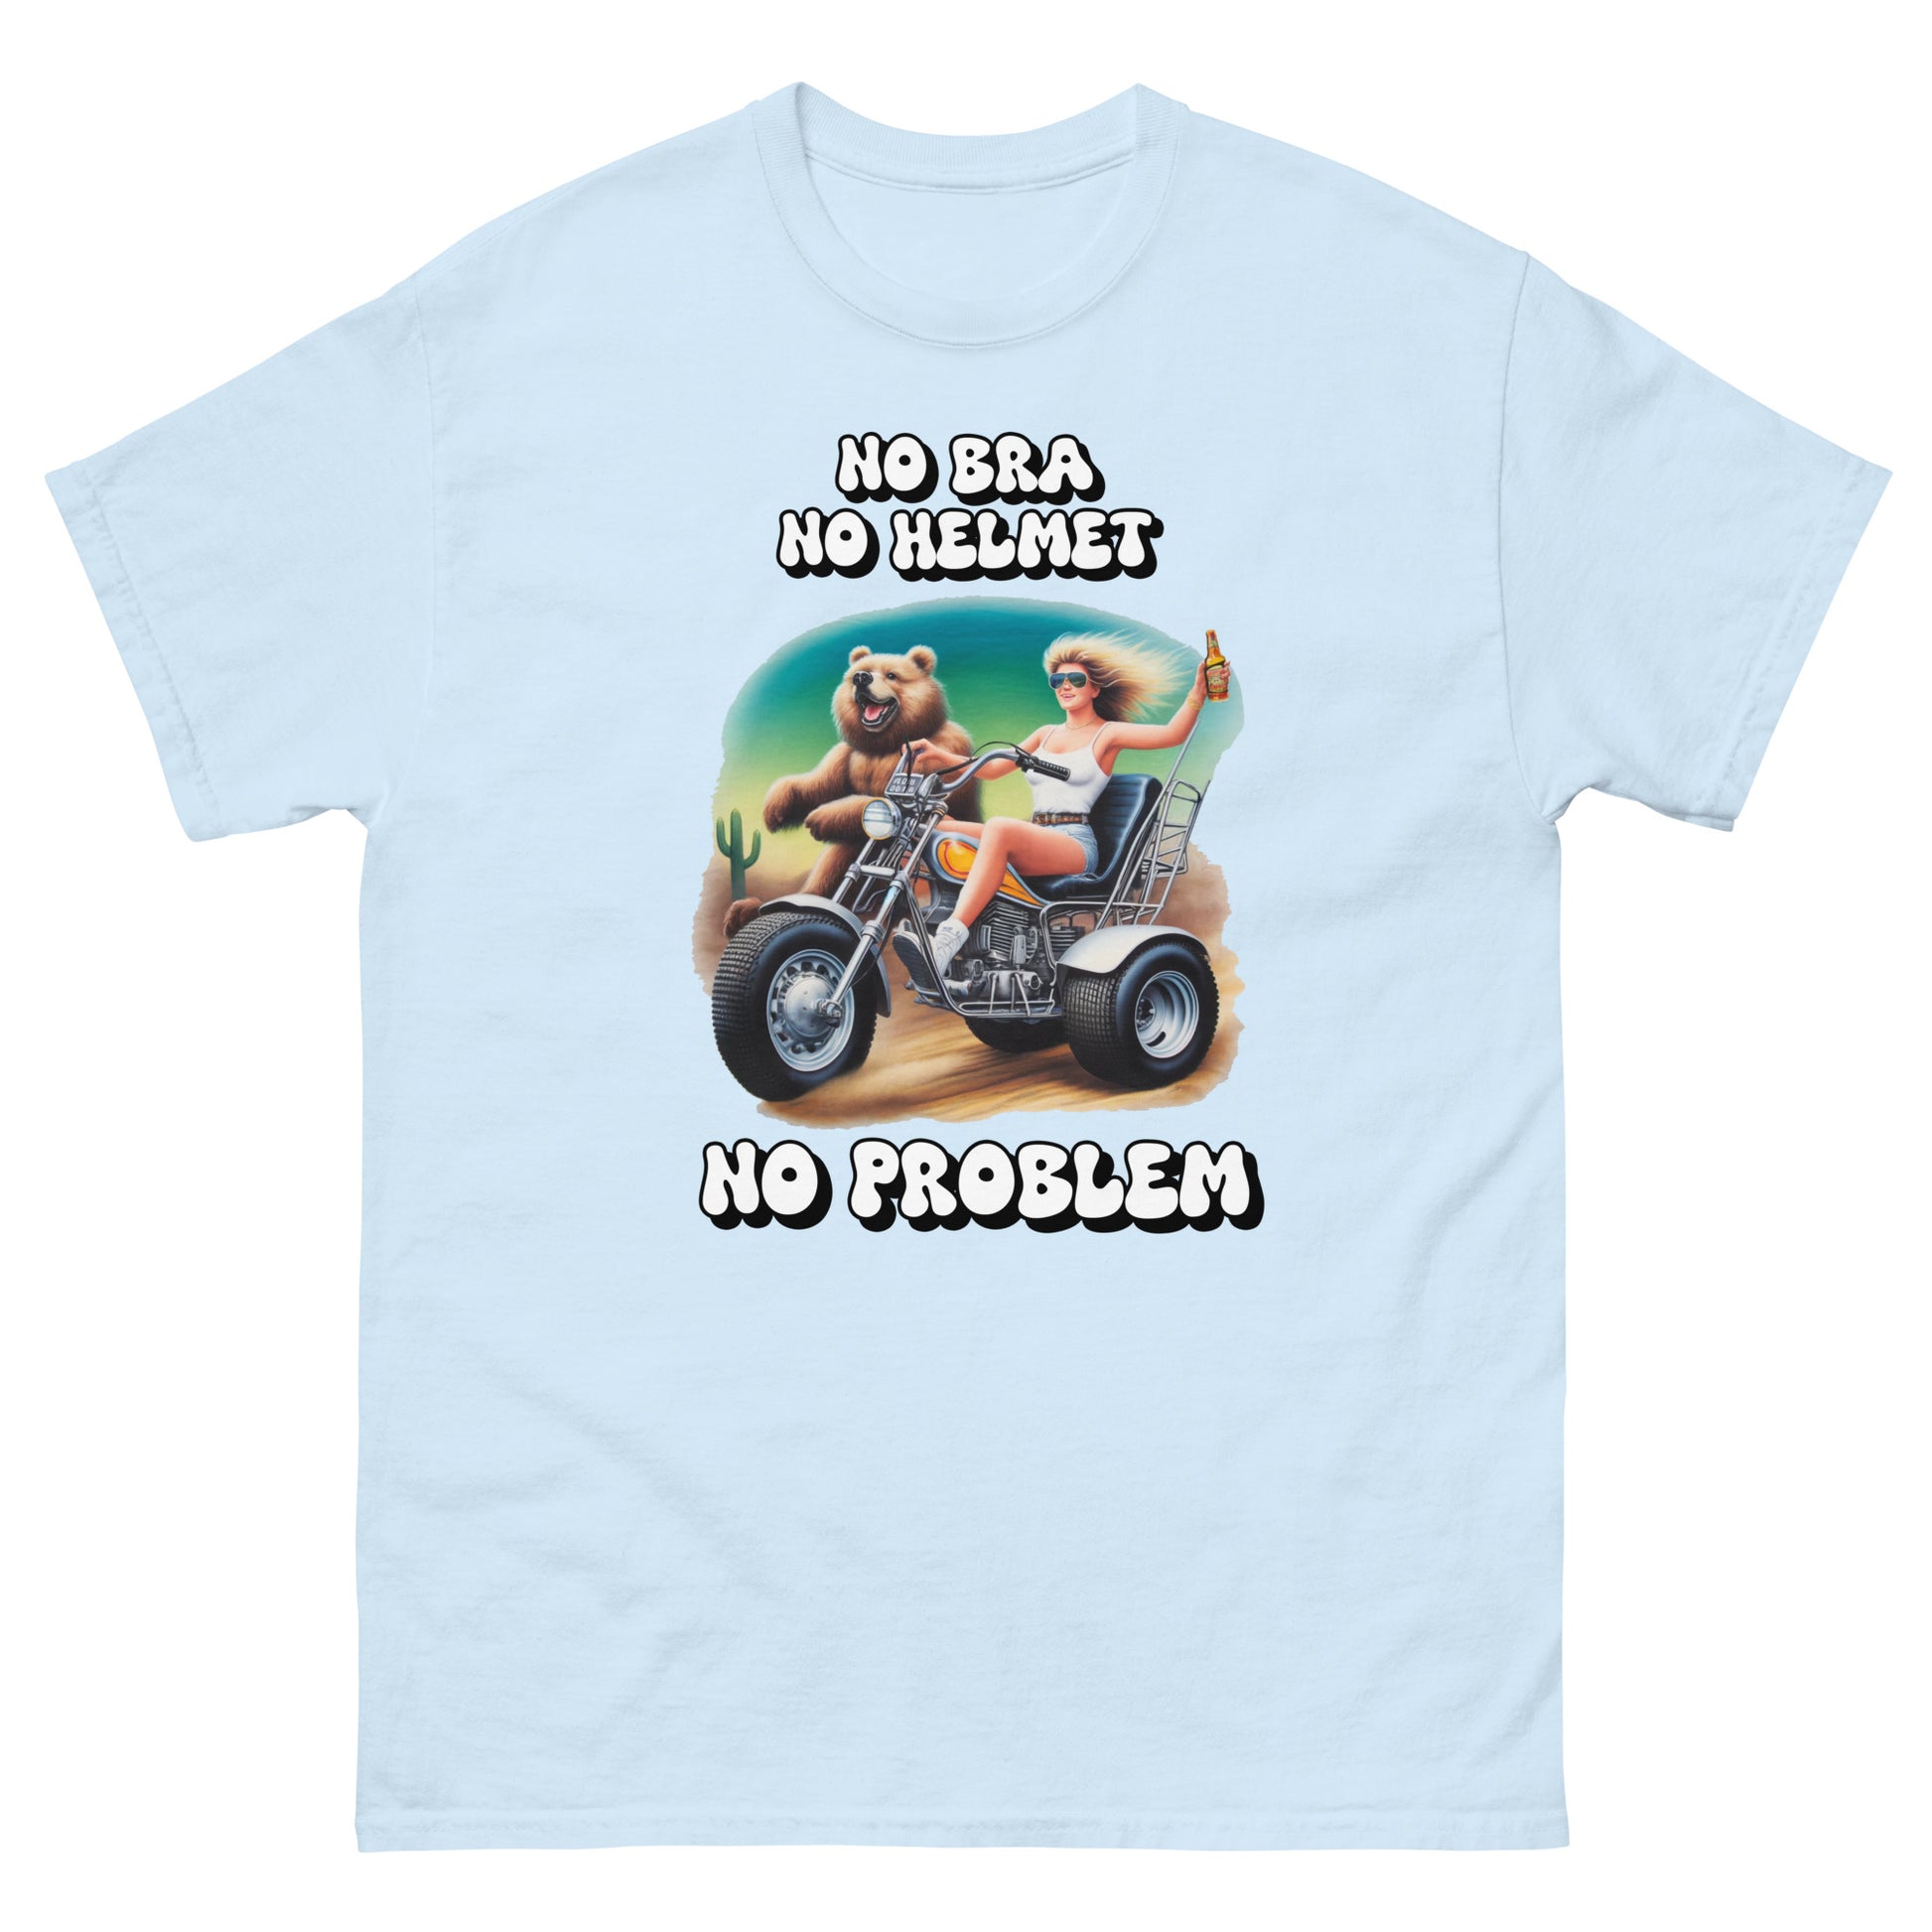 No Bra No Helmet No Problem design printed on t-shirt by Whistler Shirts